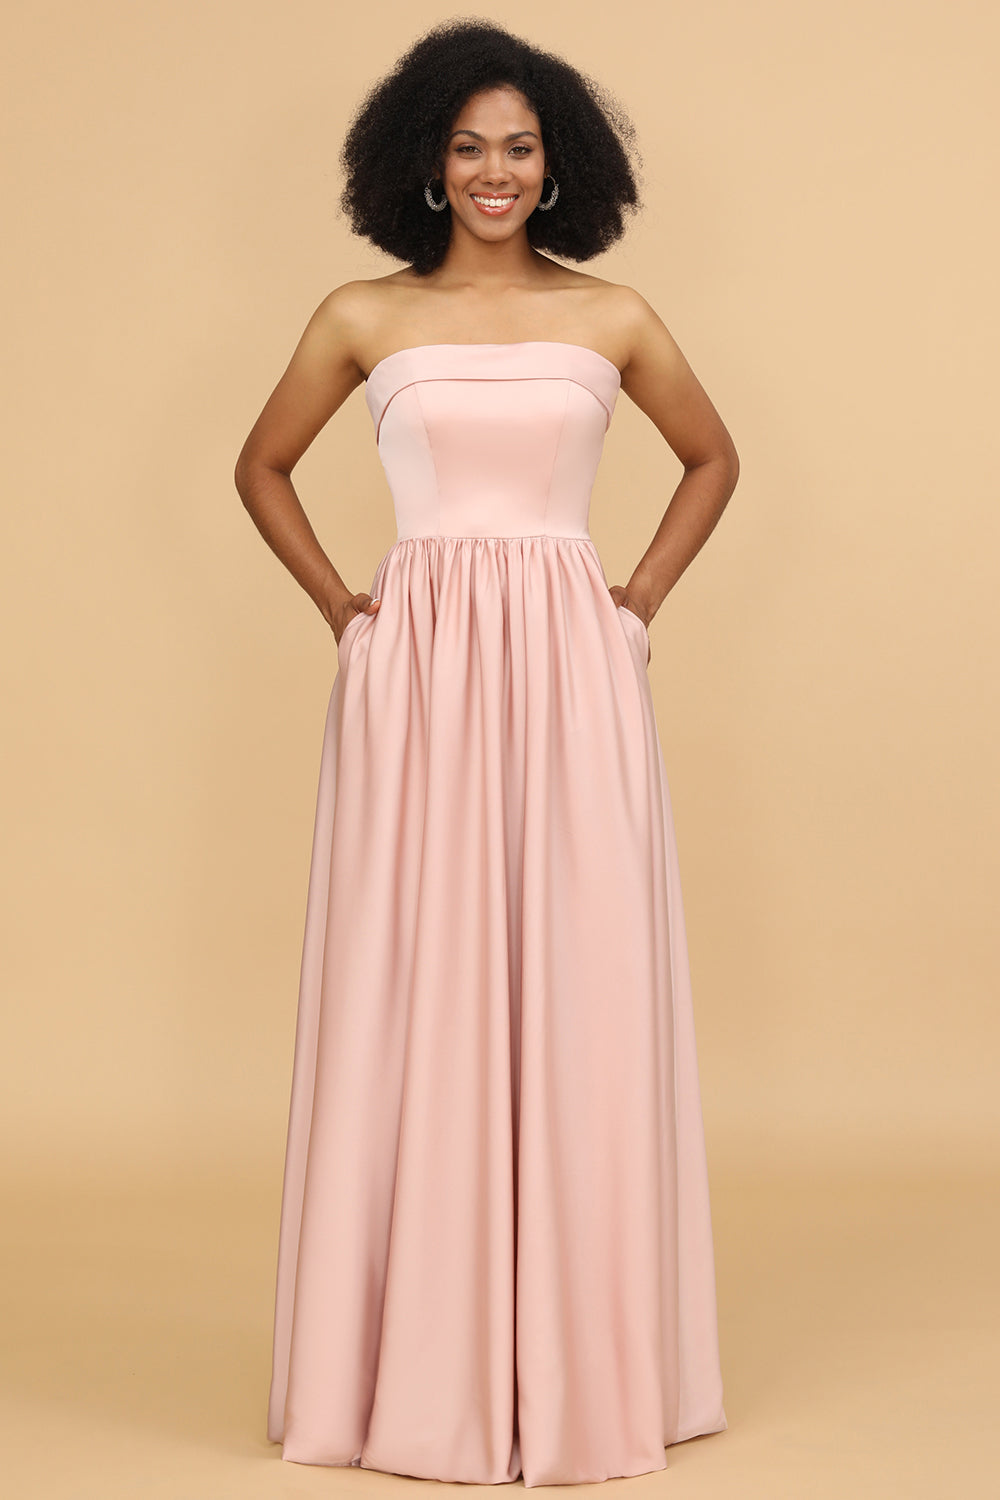 Peach Dress - Backless Dress - Cape Dress - $54.00 - Lulus